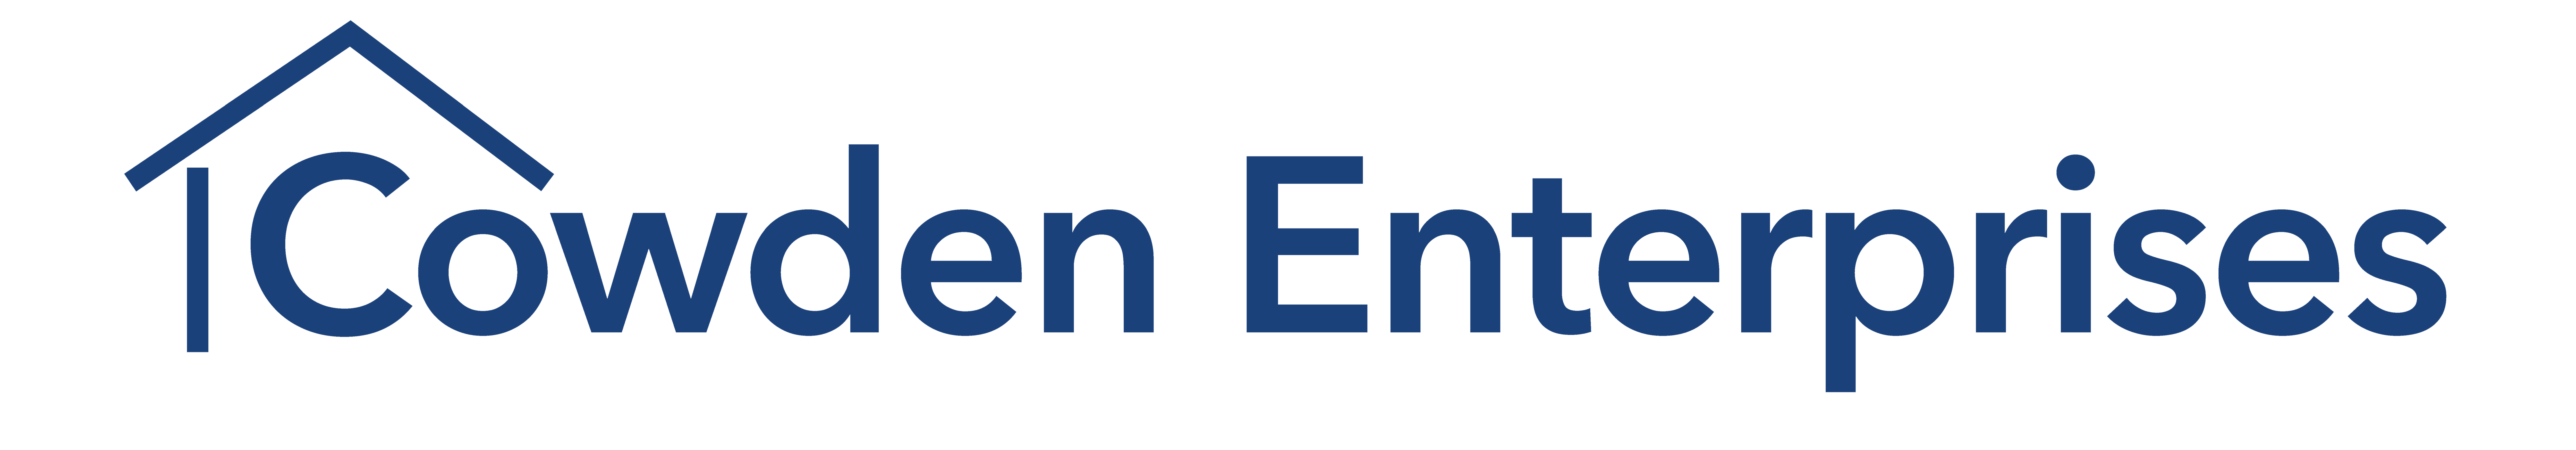 Copy of Cowden_Logo